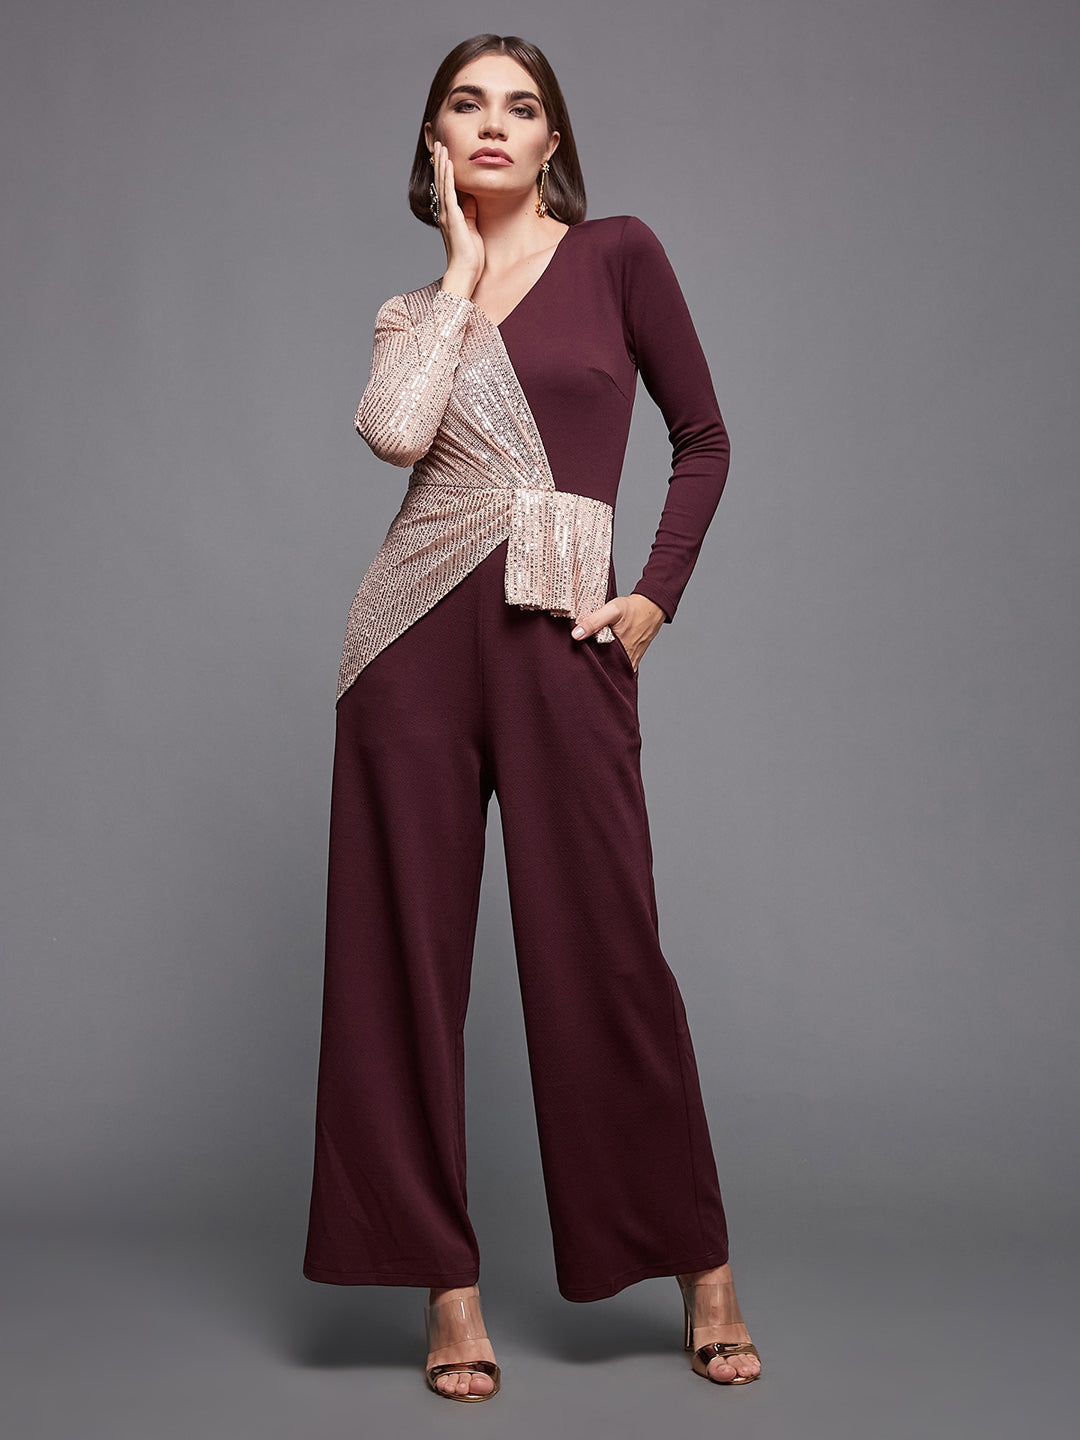 MISS CHASE | Wine & Beige V-Neck Full Sleeve Embellished Asymmetric Regular-Length Polyester Jumpsuit